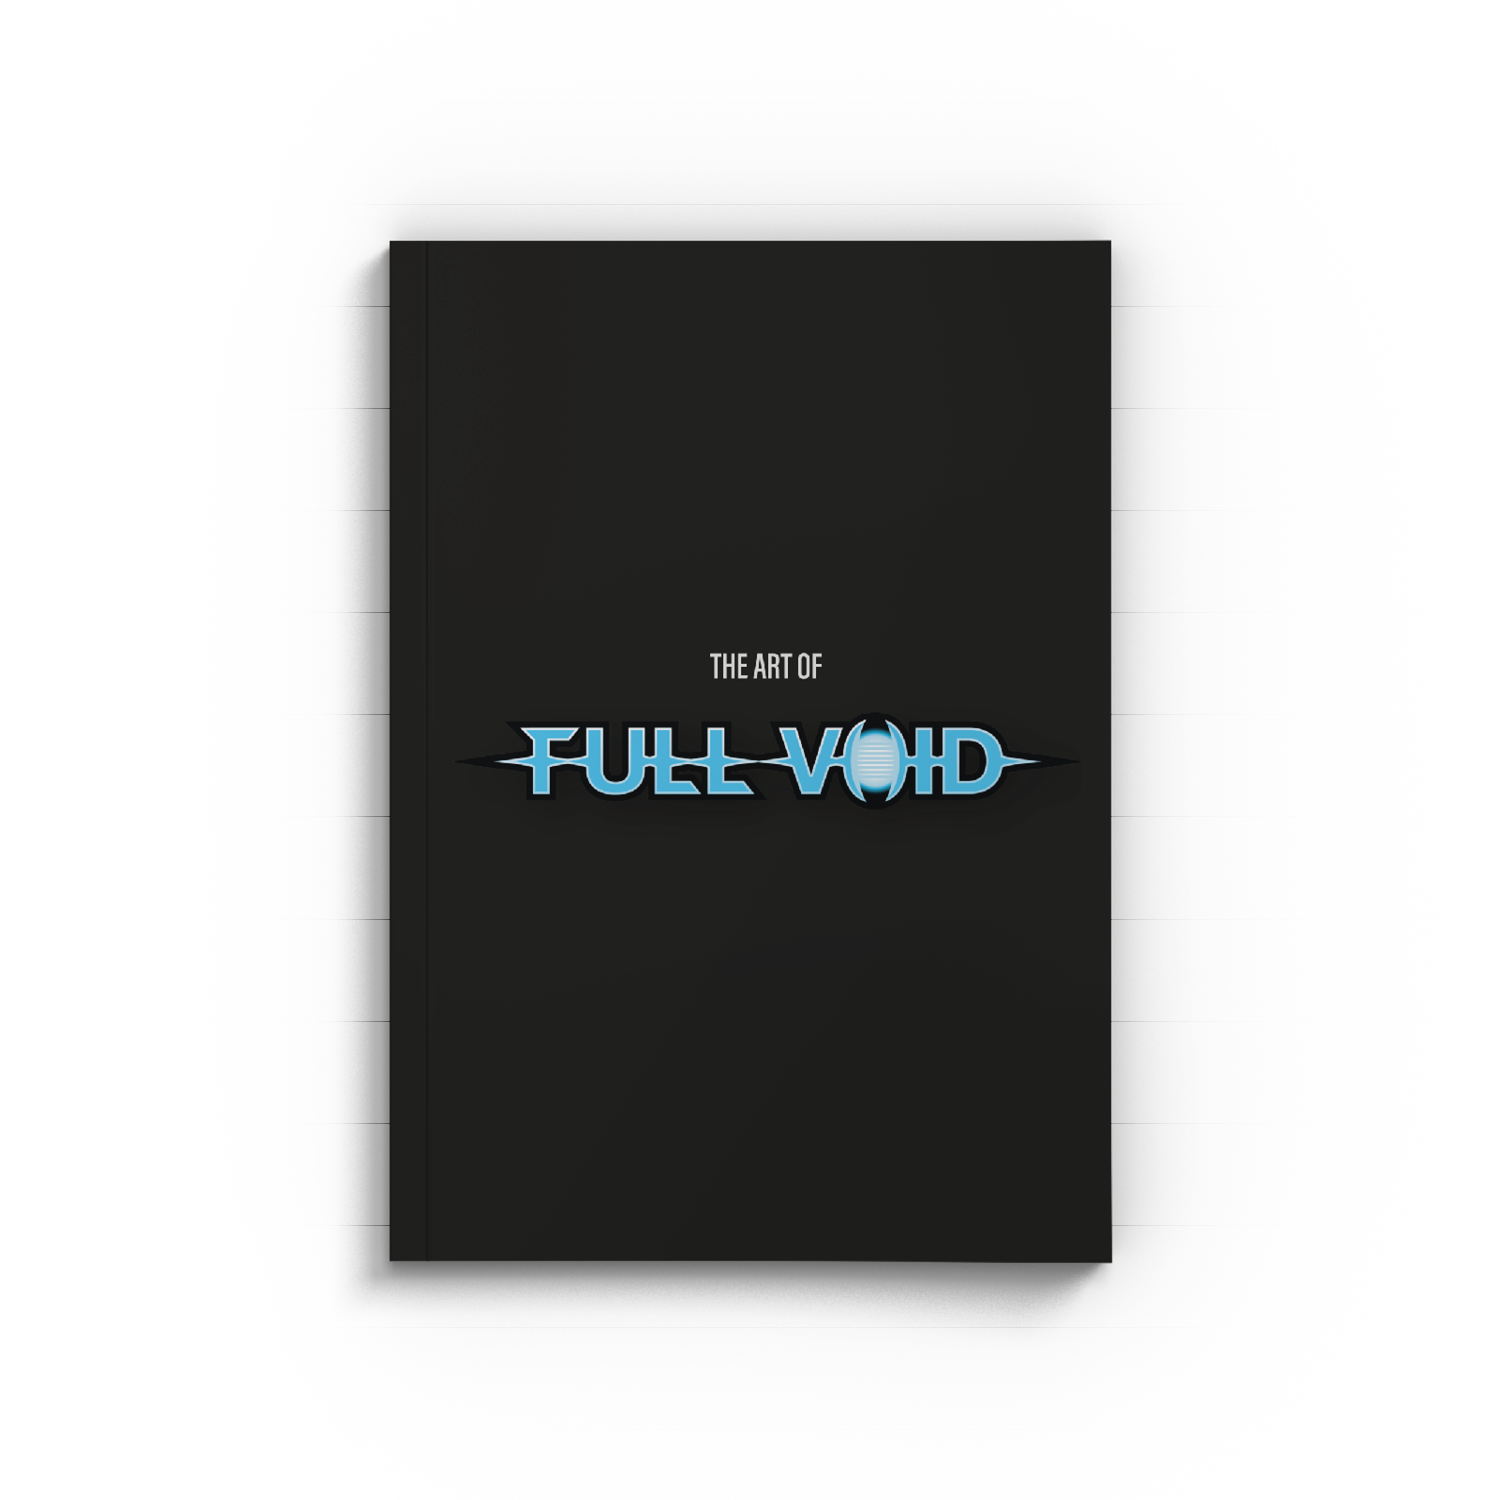 Full Void Special Edition - Evercade Cartridge